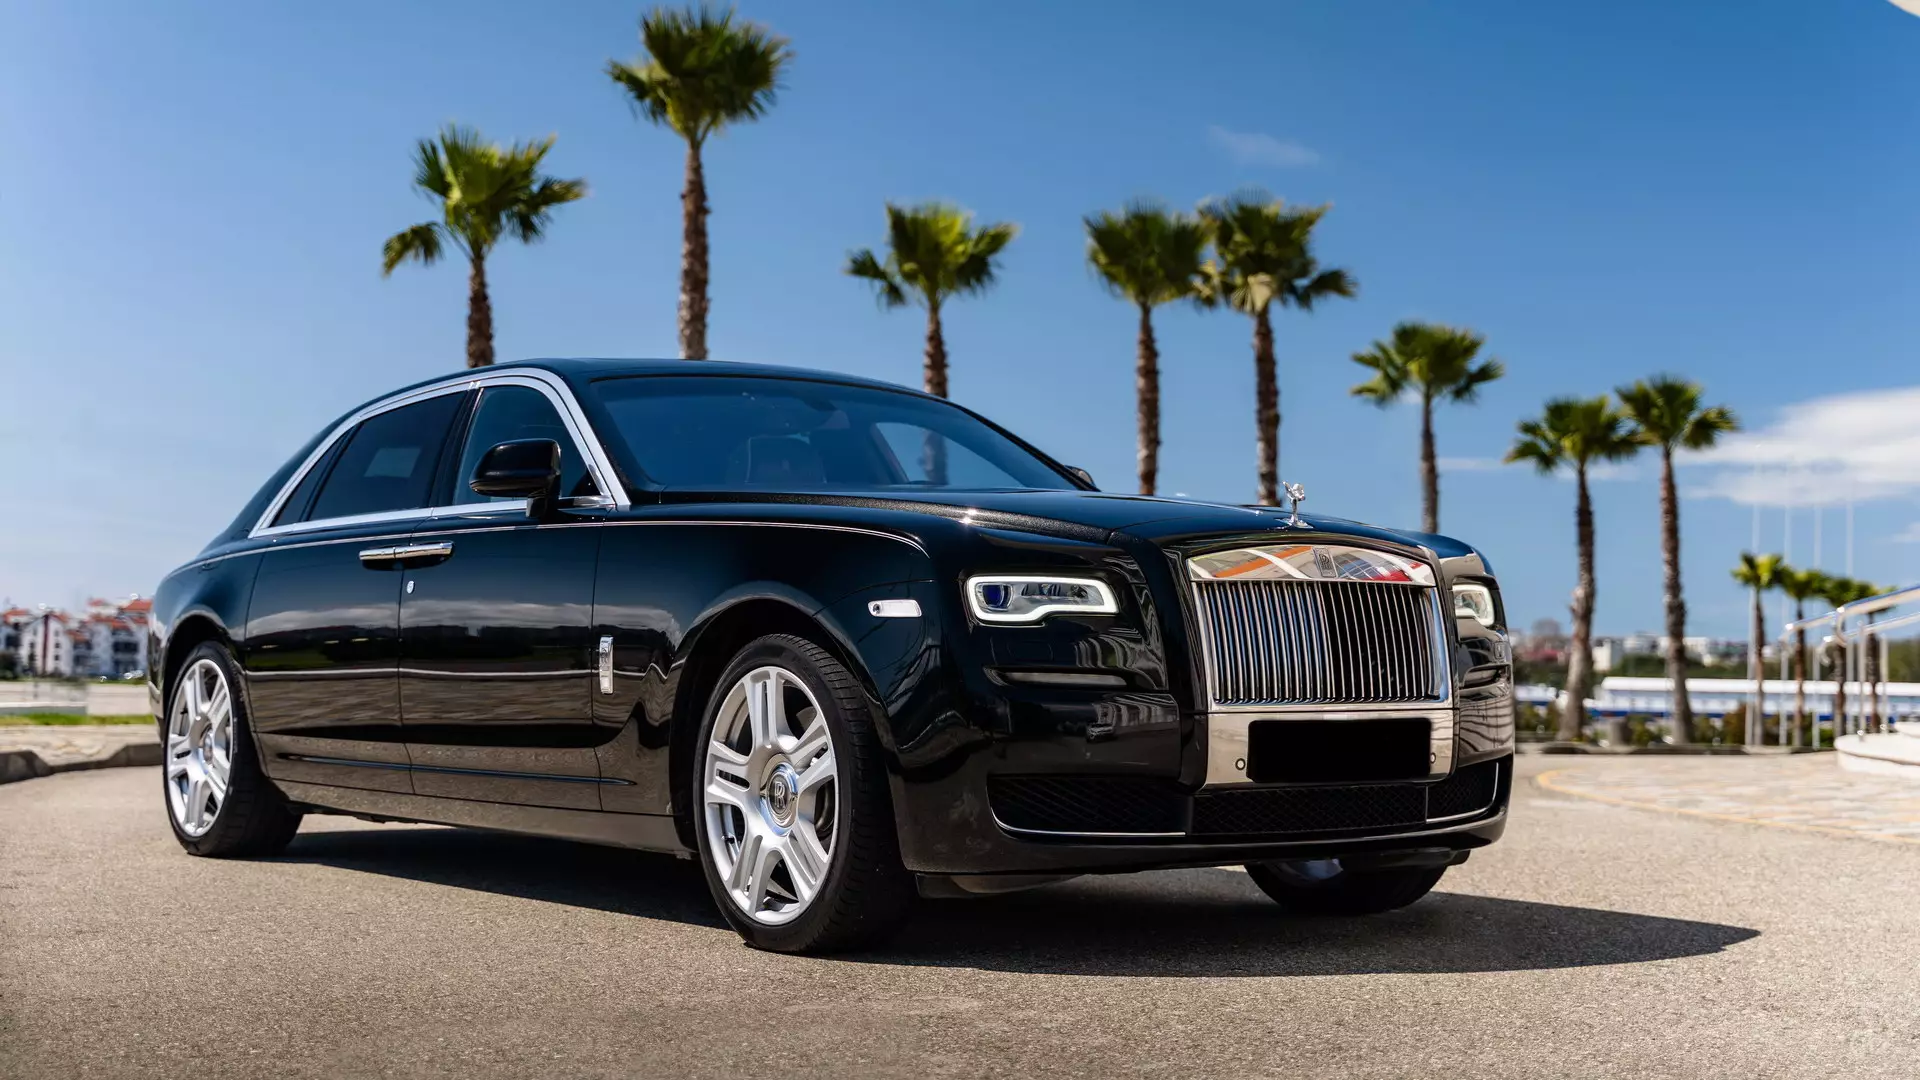 Аренда с водителем сочи. Rolls Royce Ghost long. Машина Rolls Royce Ghost long. Rolls Royce Ghost Сочи. Rolls Royce Ghost long 2021.